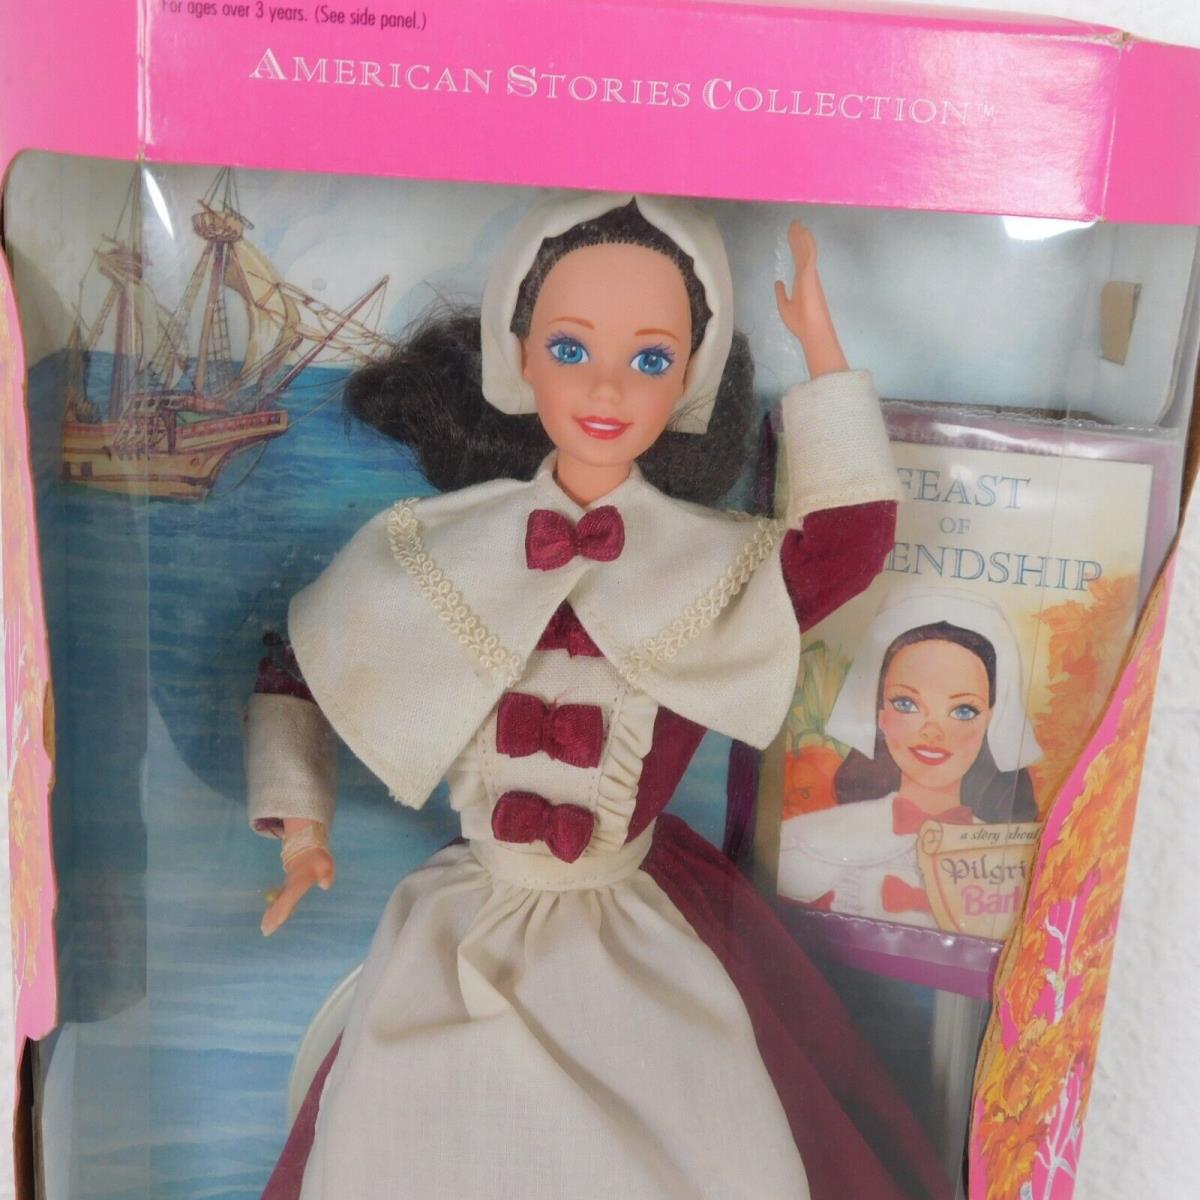 Pilgrim Barbie Special Edition Mattel 1994 American Stories Collection 12577